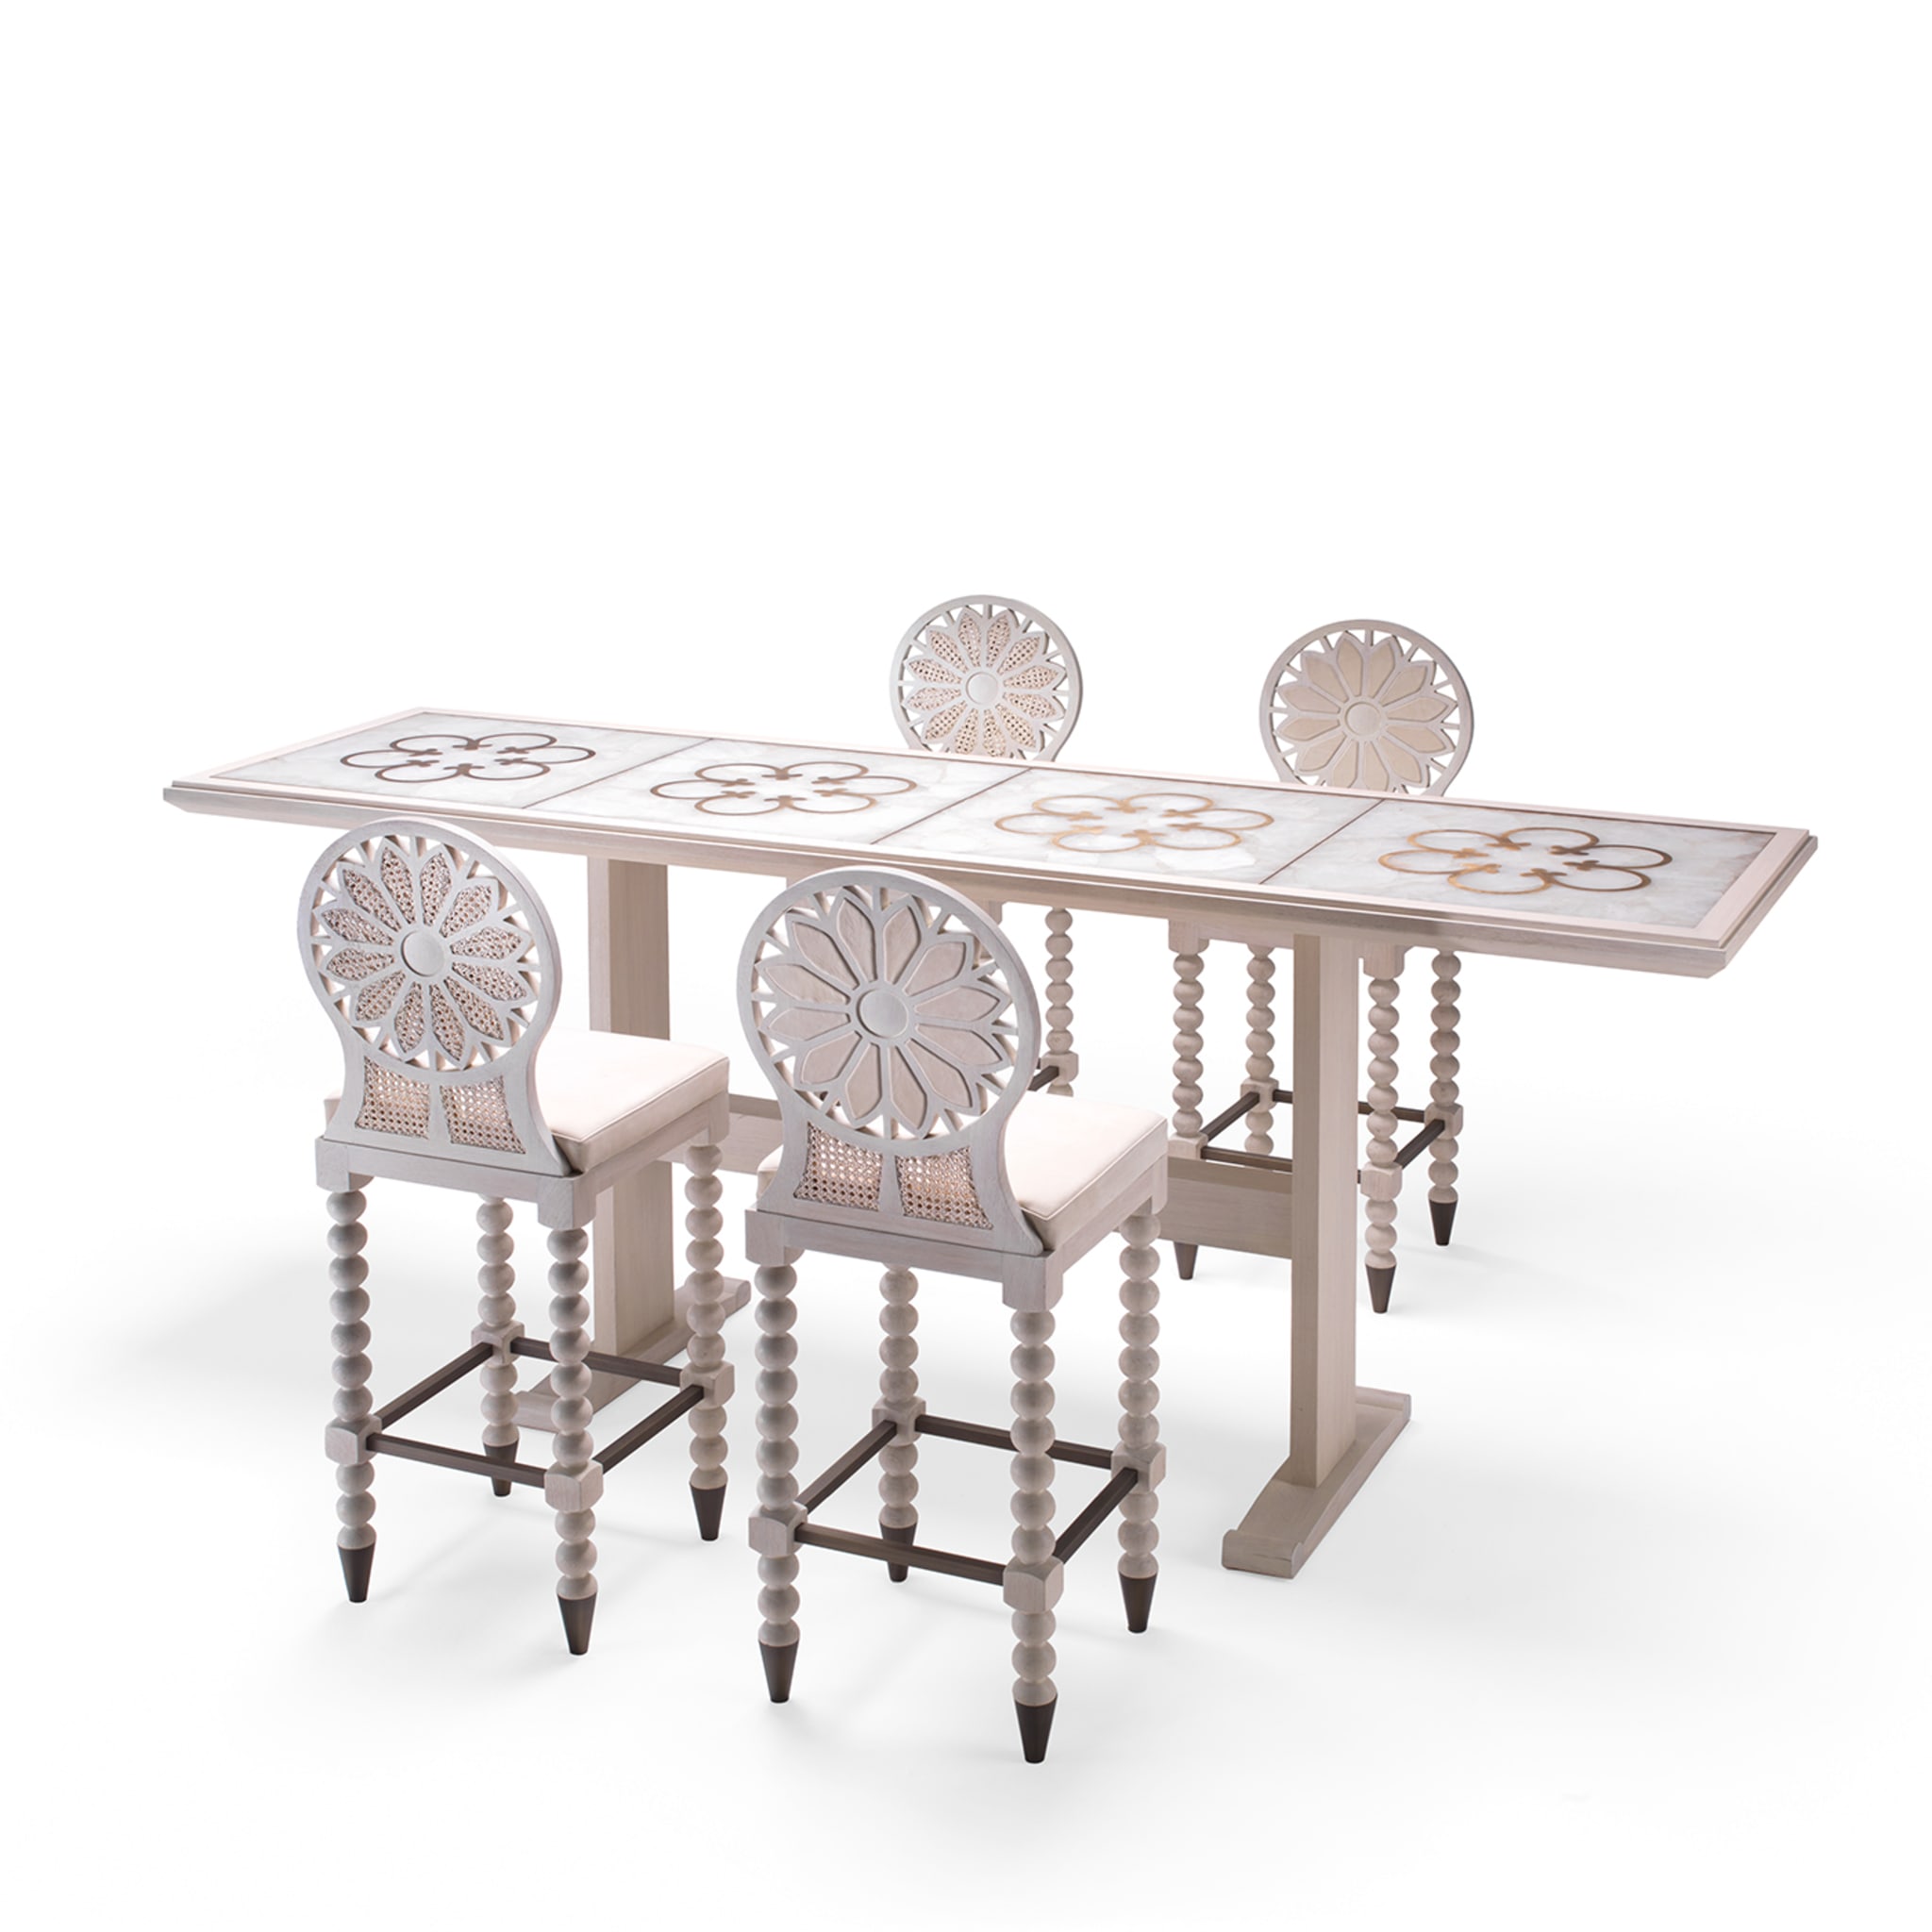 Four Quatrefoils Table by Archer Humphryes Architects - Alternative view 3